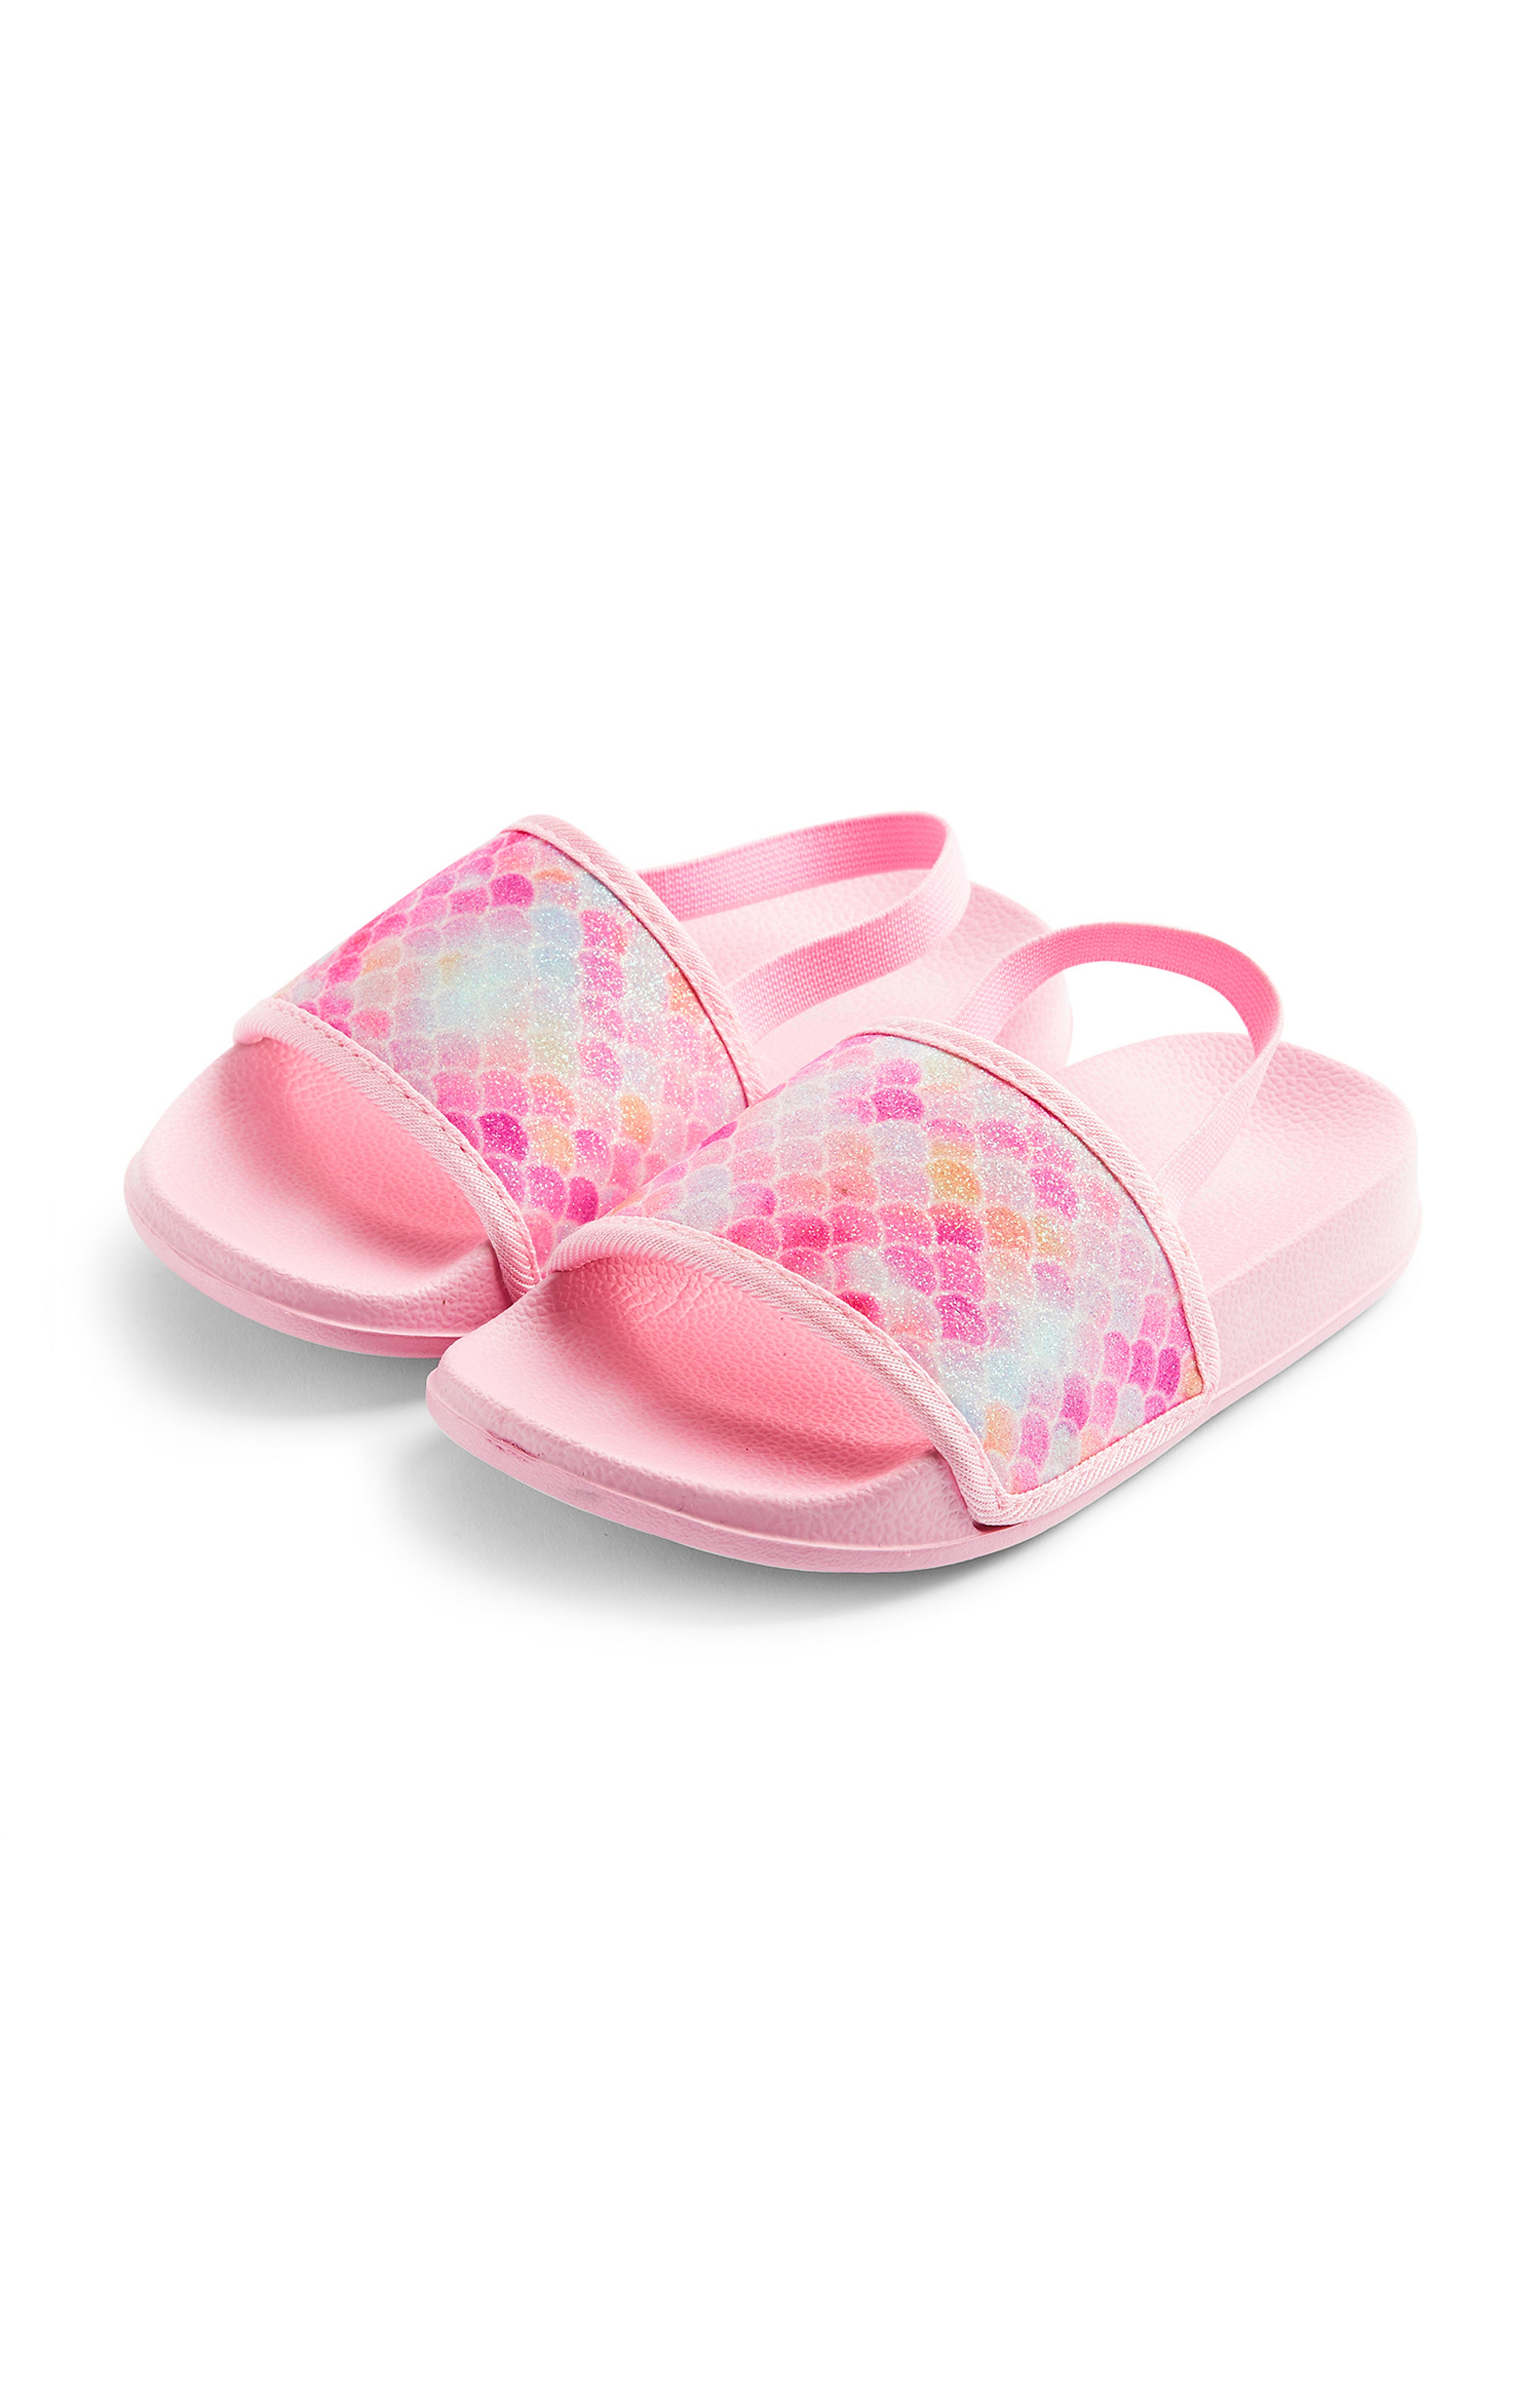 Chanclas de piscina rosas de sirena con brillos para niña pequeña Zapatos para niña Moda para niñas | Ropa niños | Todos los productos Primark | Primark España